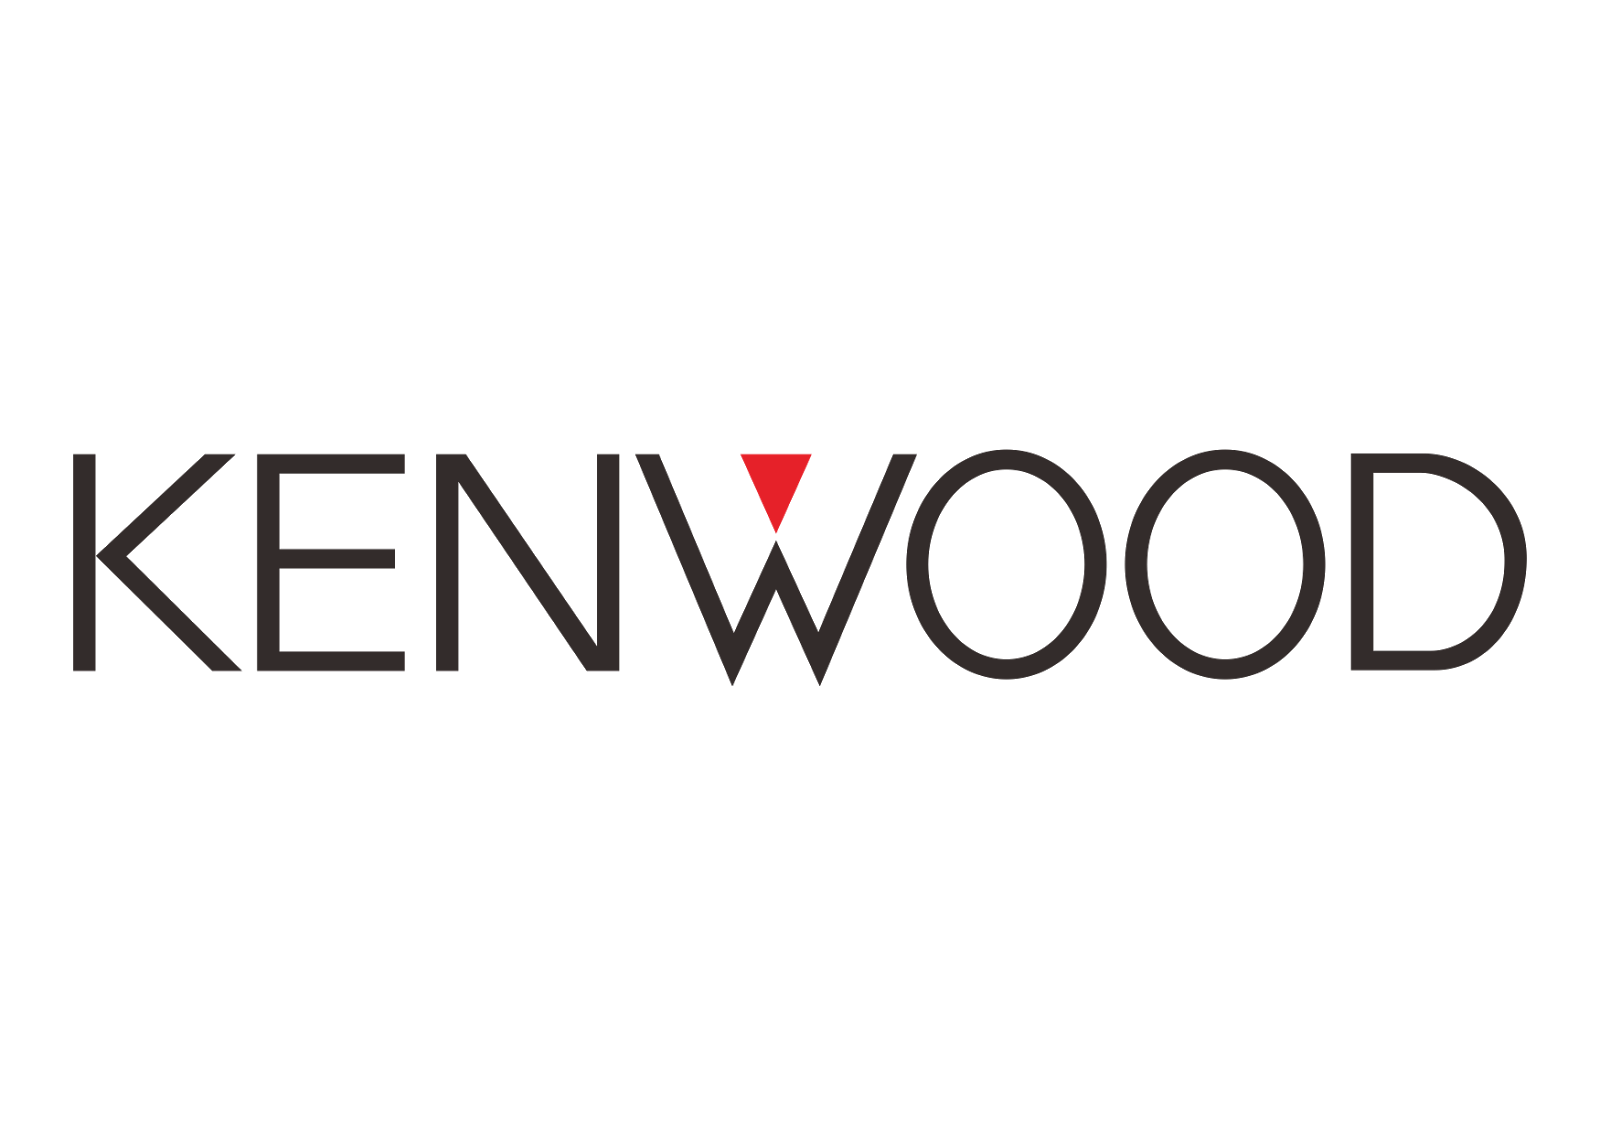 Kenwood-logo-vector